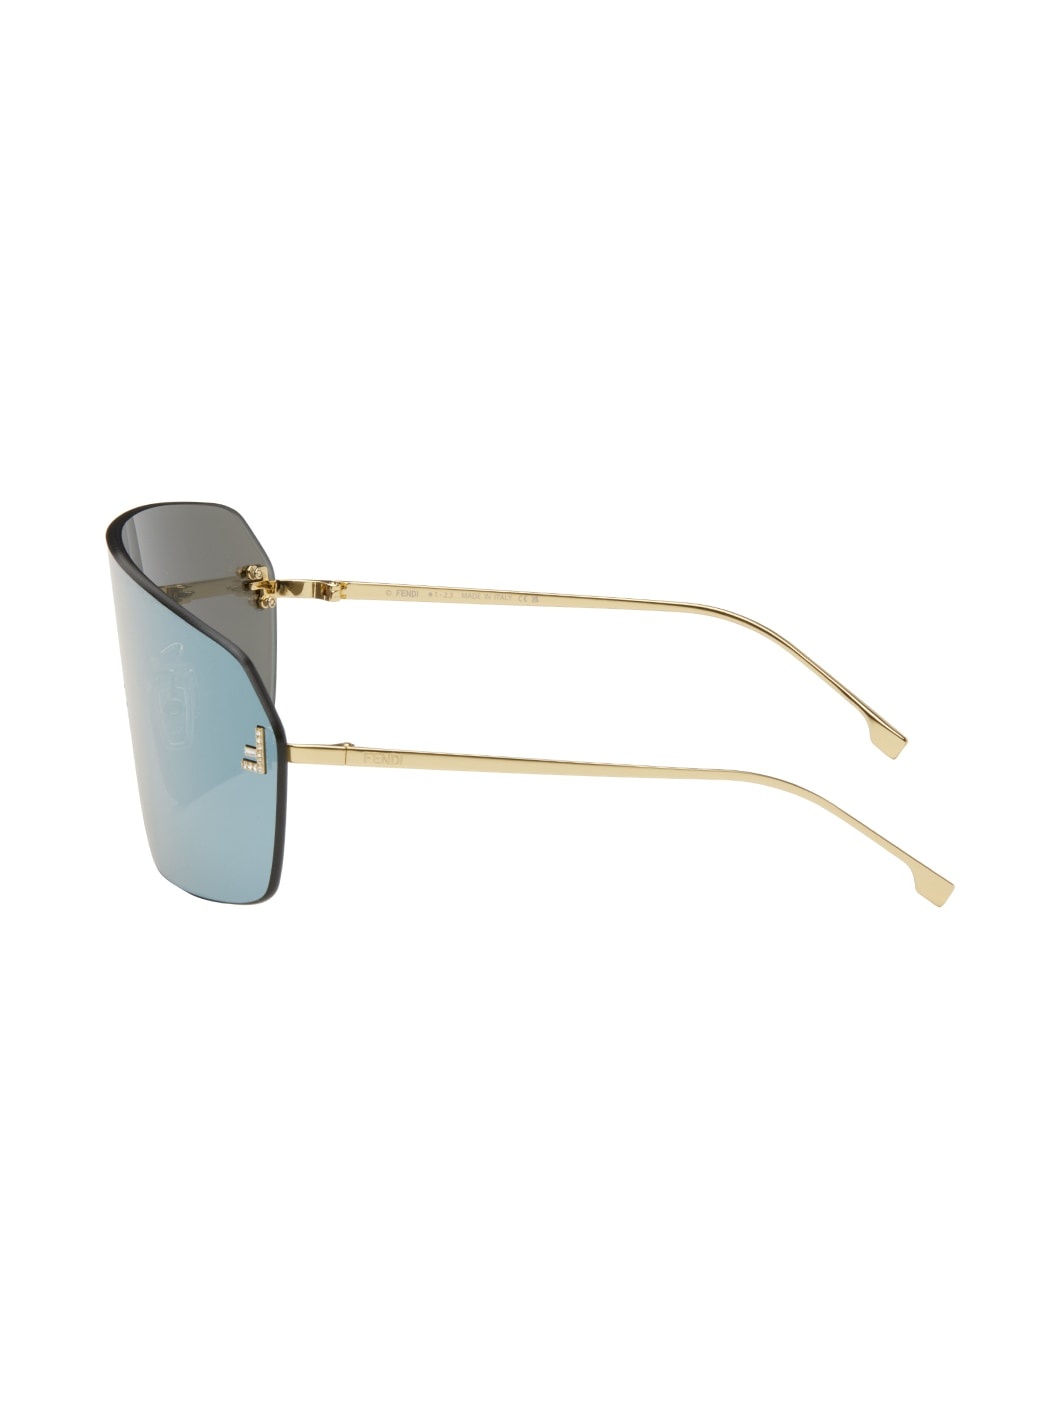 Gold Fendi First Crystal Sunglasses - 3